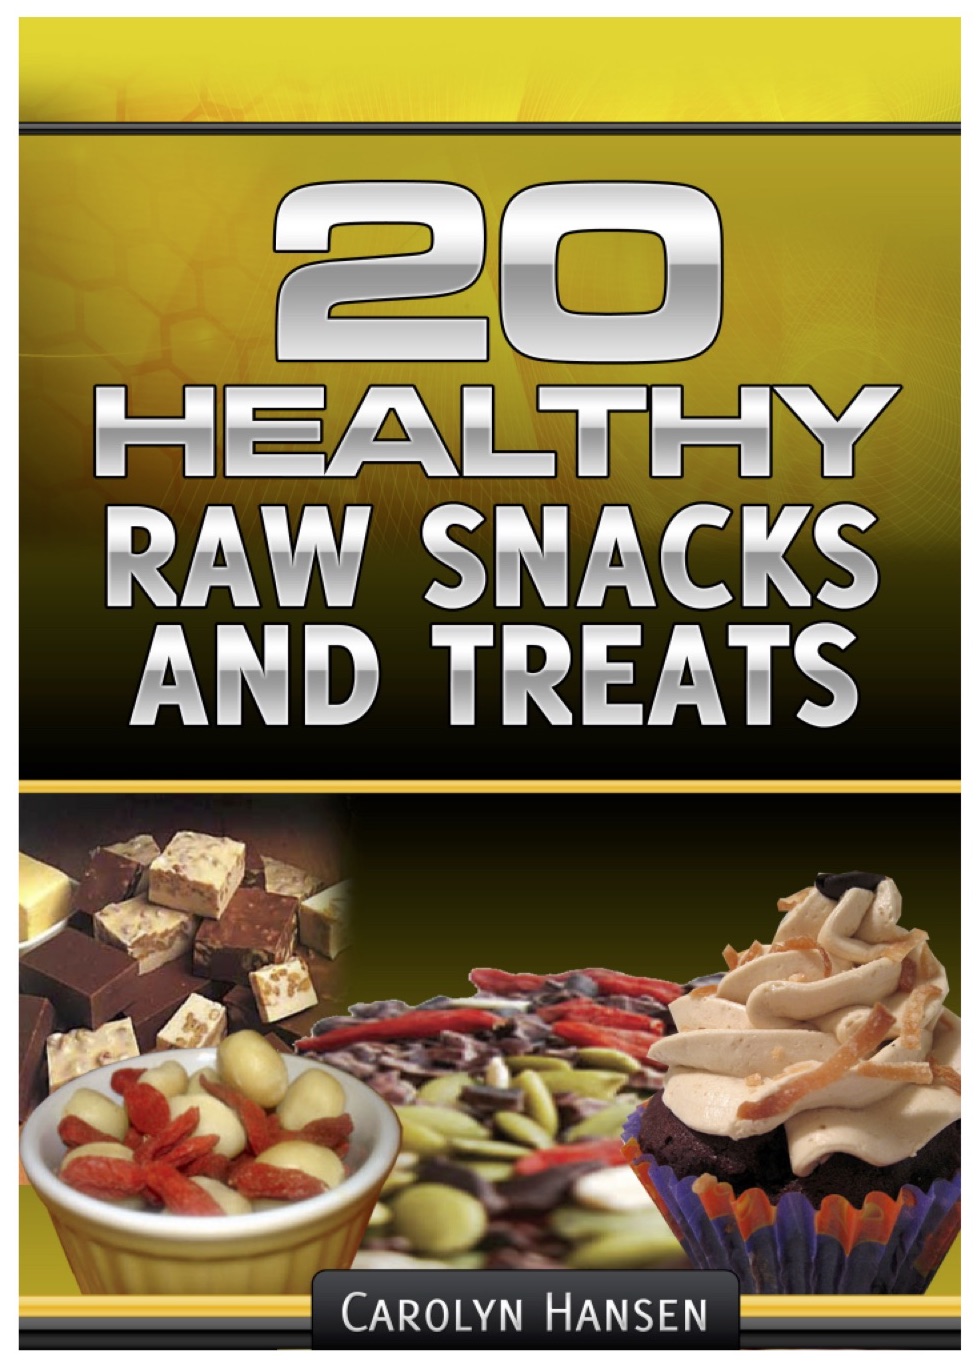 FREE Healthy Recipes Book